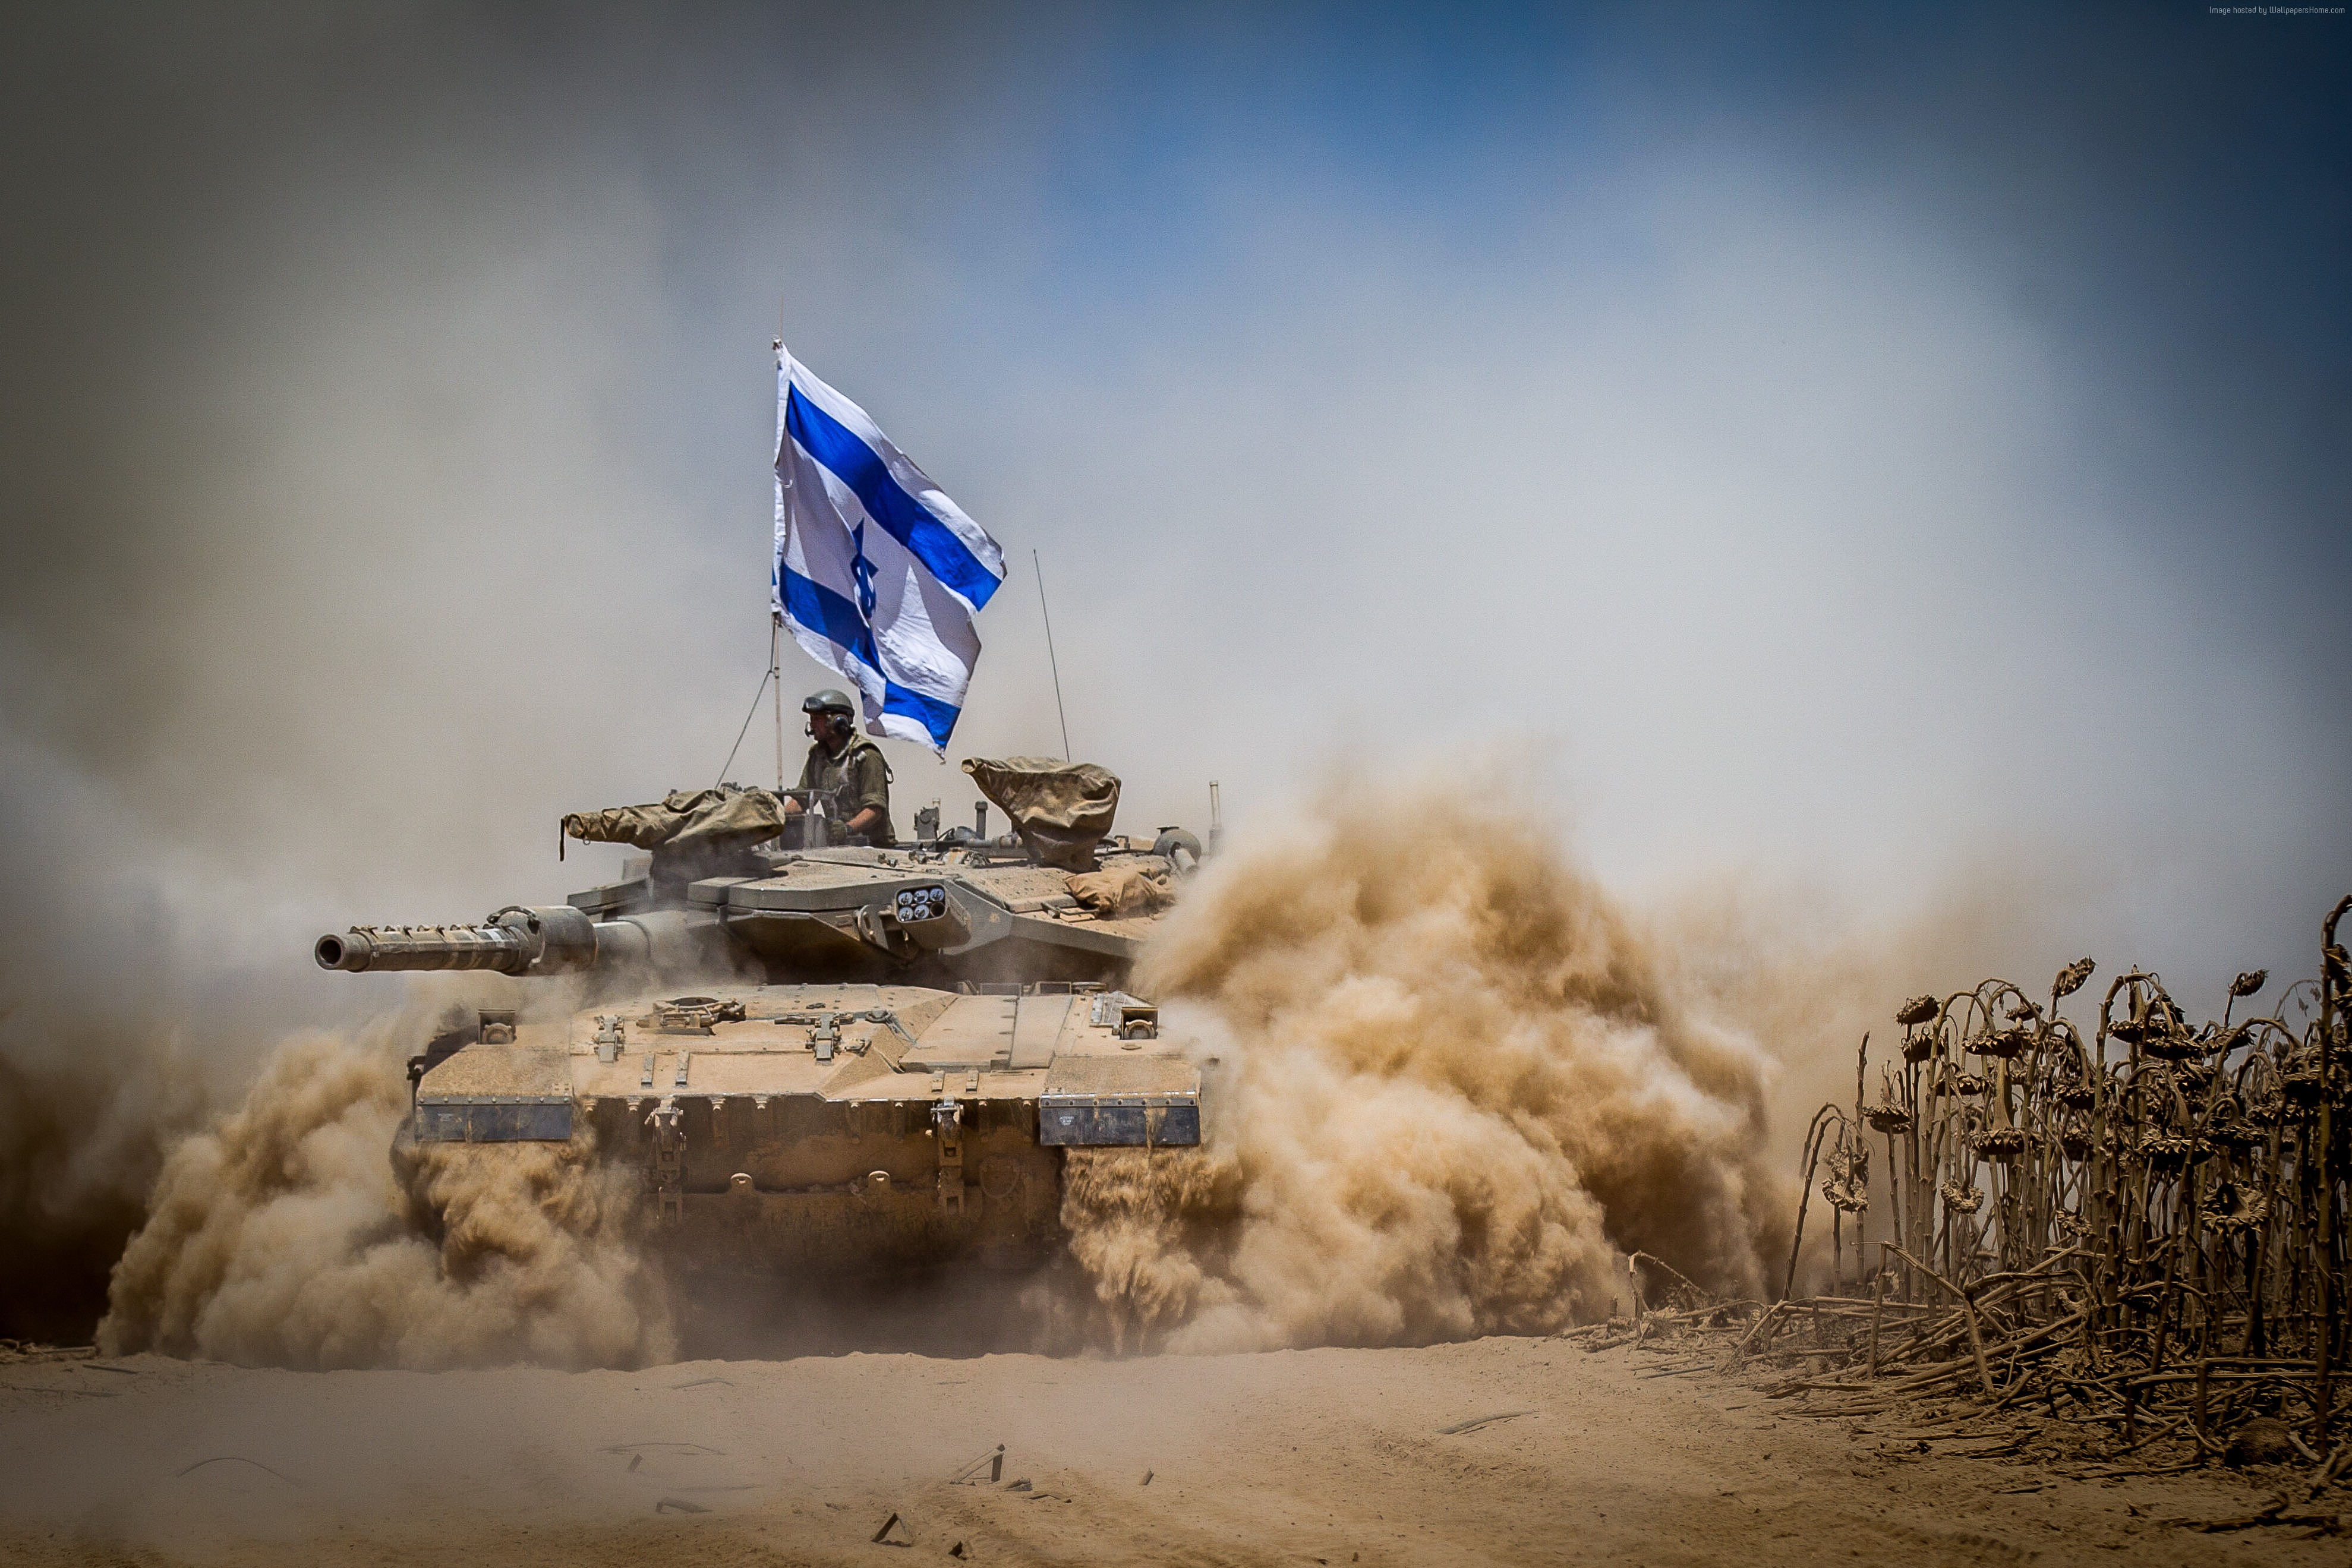 merkava-mark-iv-3958x2639-tank-flag-israel-army-israel-defense-forces-10111